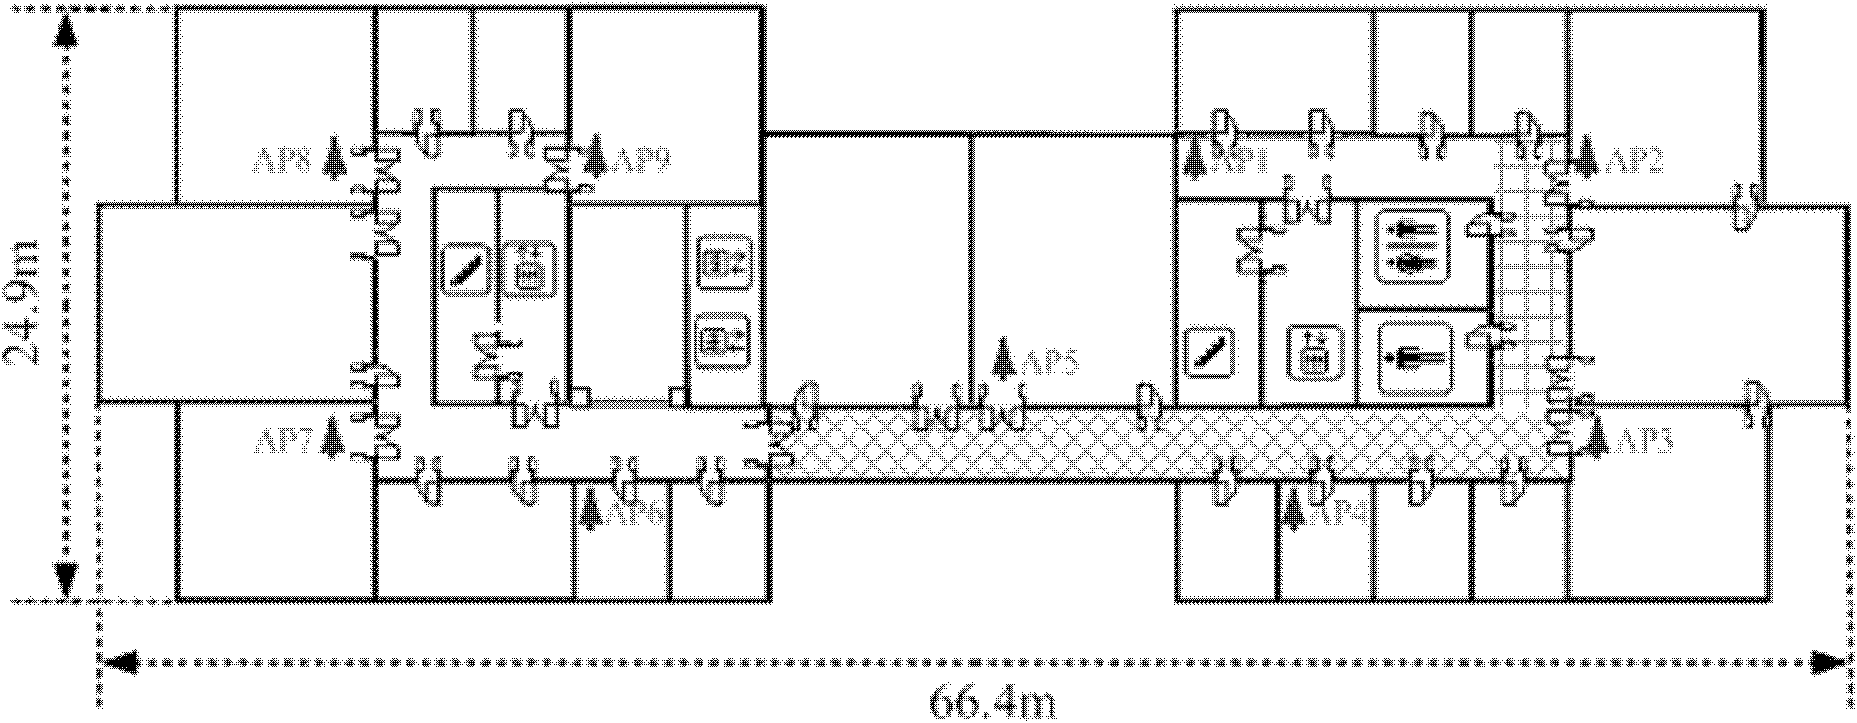 WLAN (Wireless Local Area Network) indoor neighbourhood matching positioning method based on autocorrelation filtering